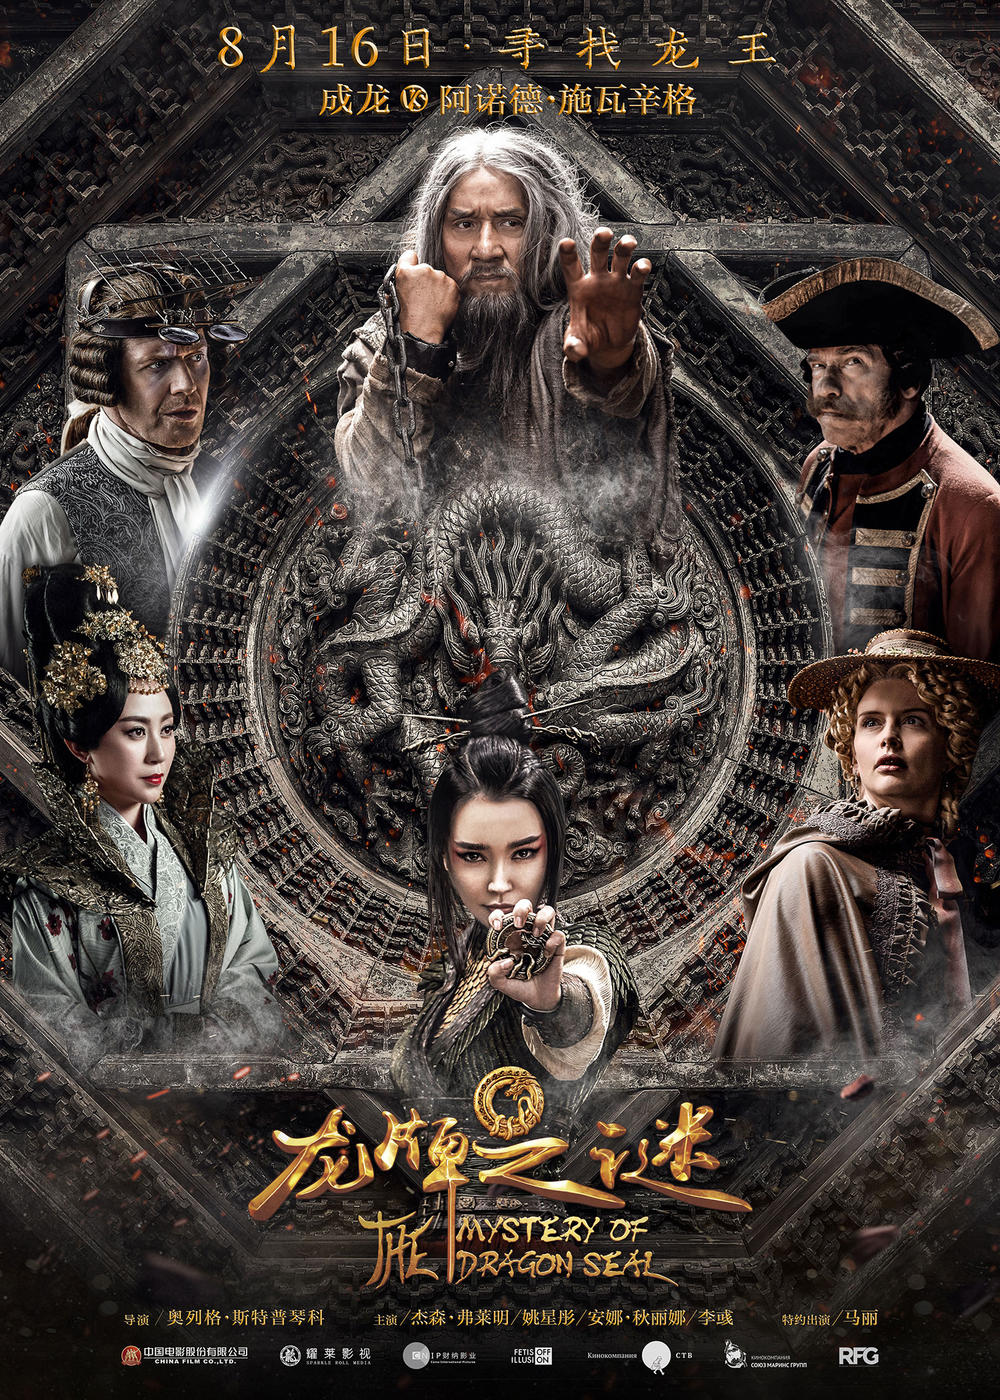 Cny 2020 7 Chinese New Year Movies To Enjoy This Season